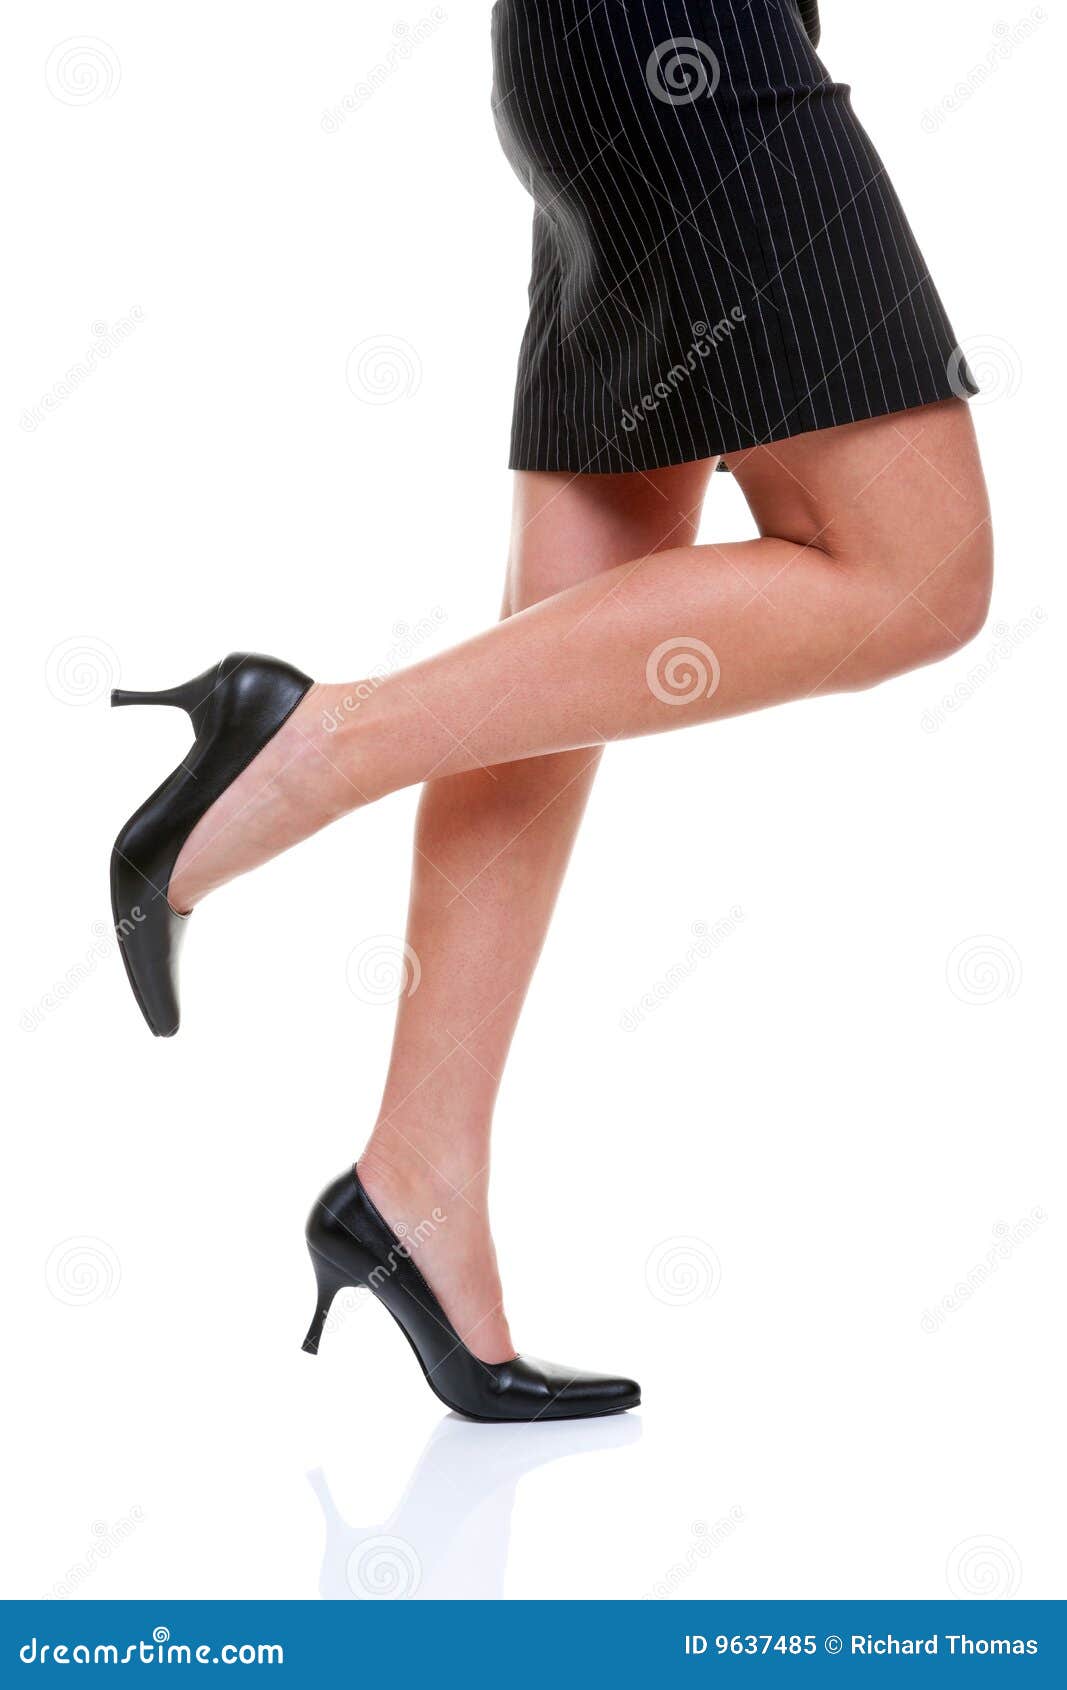 short black stiletto heels